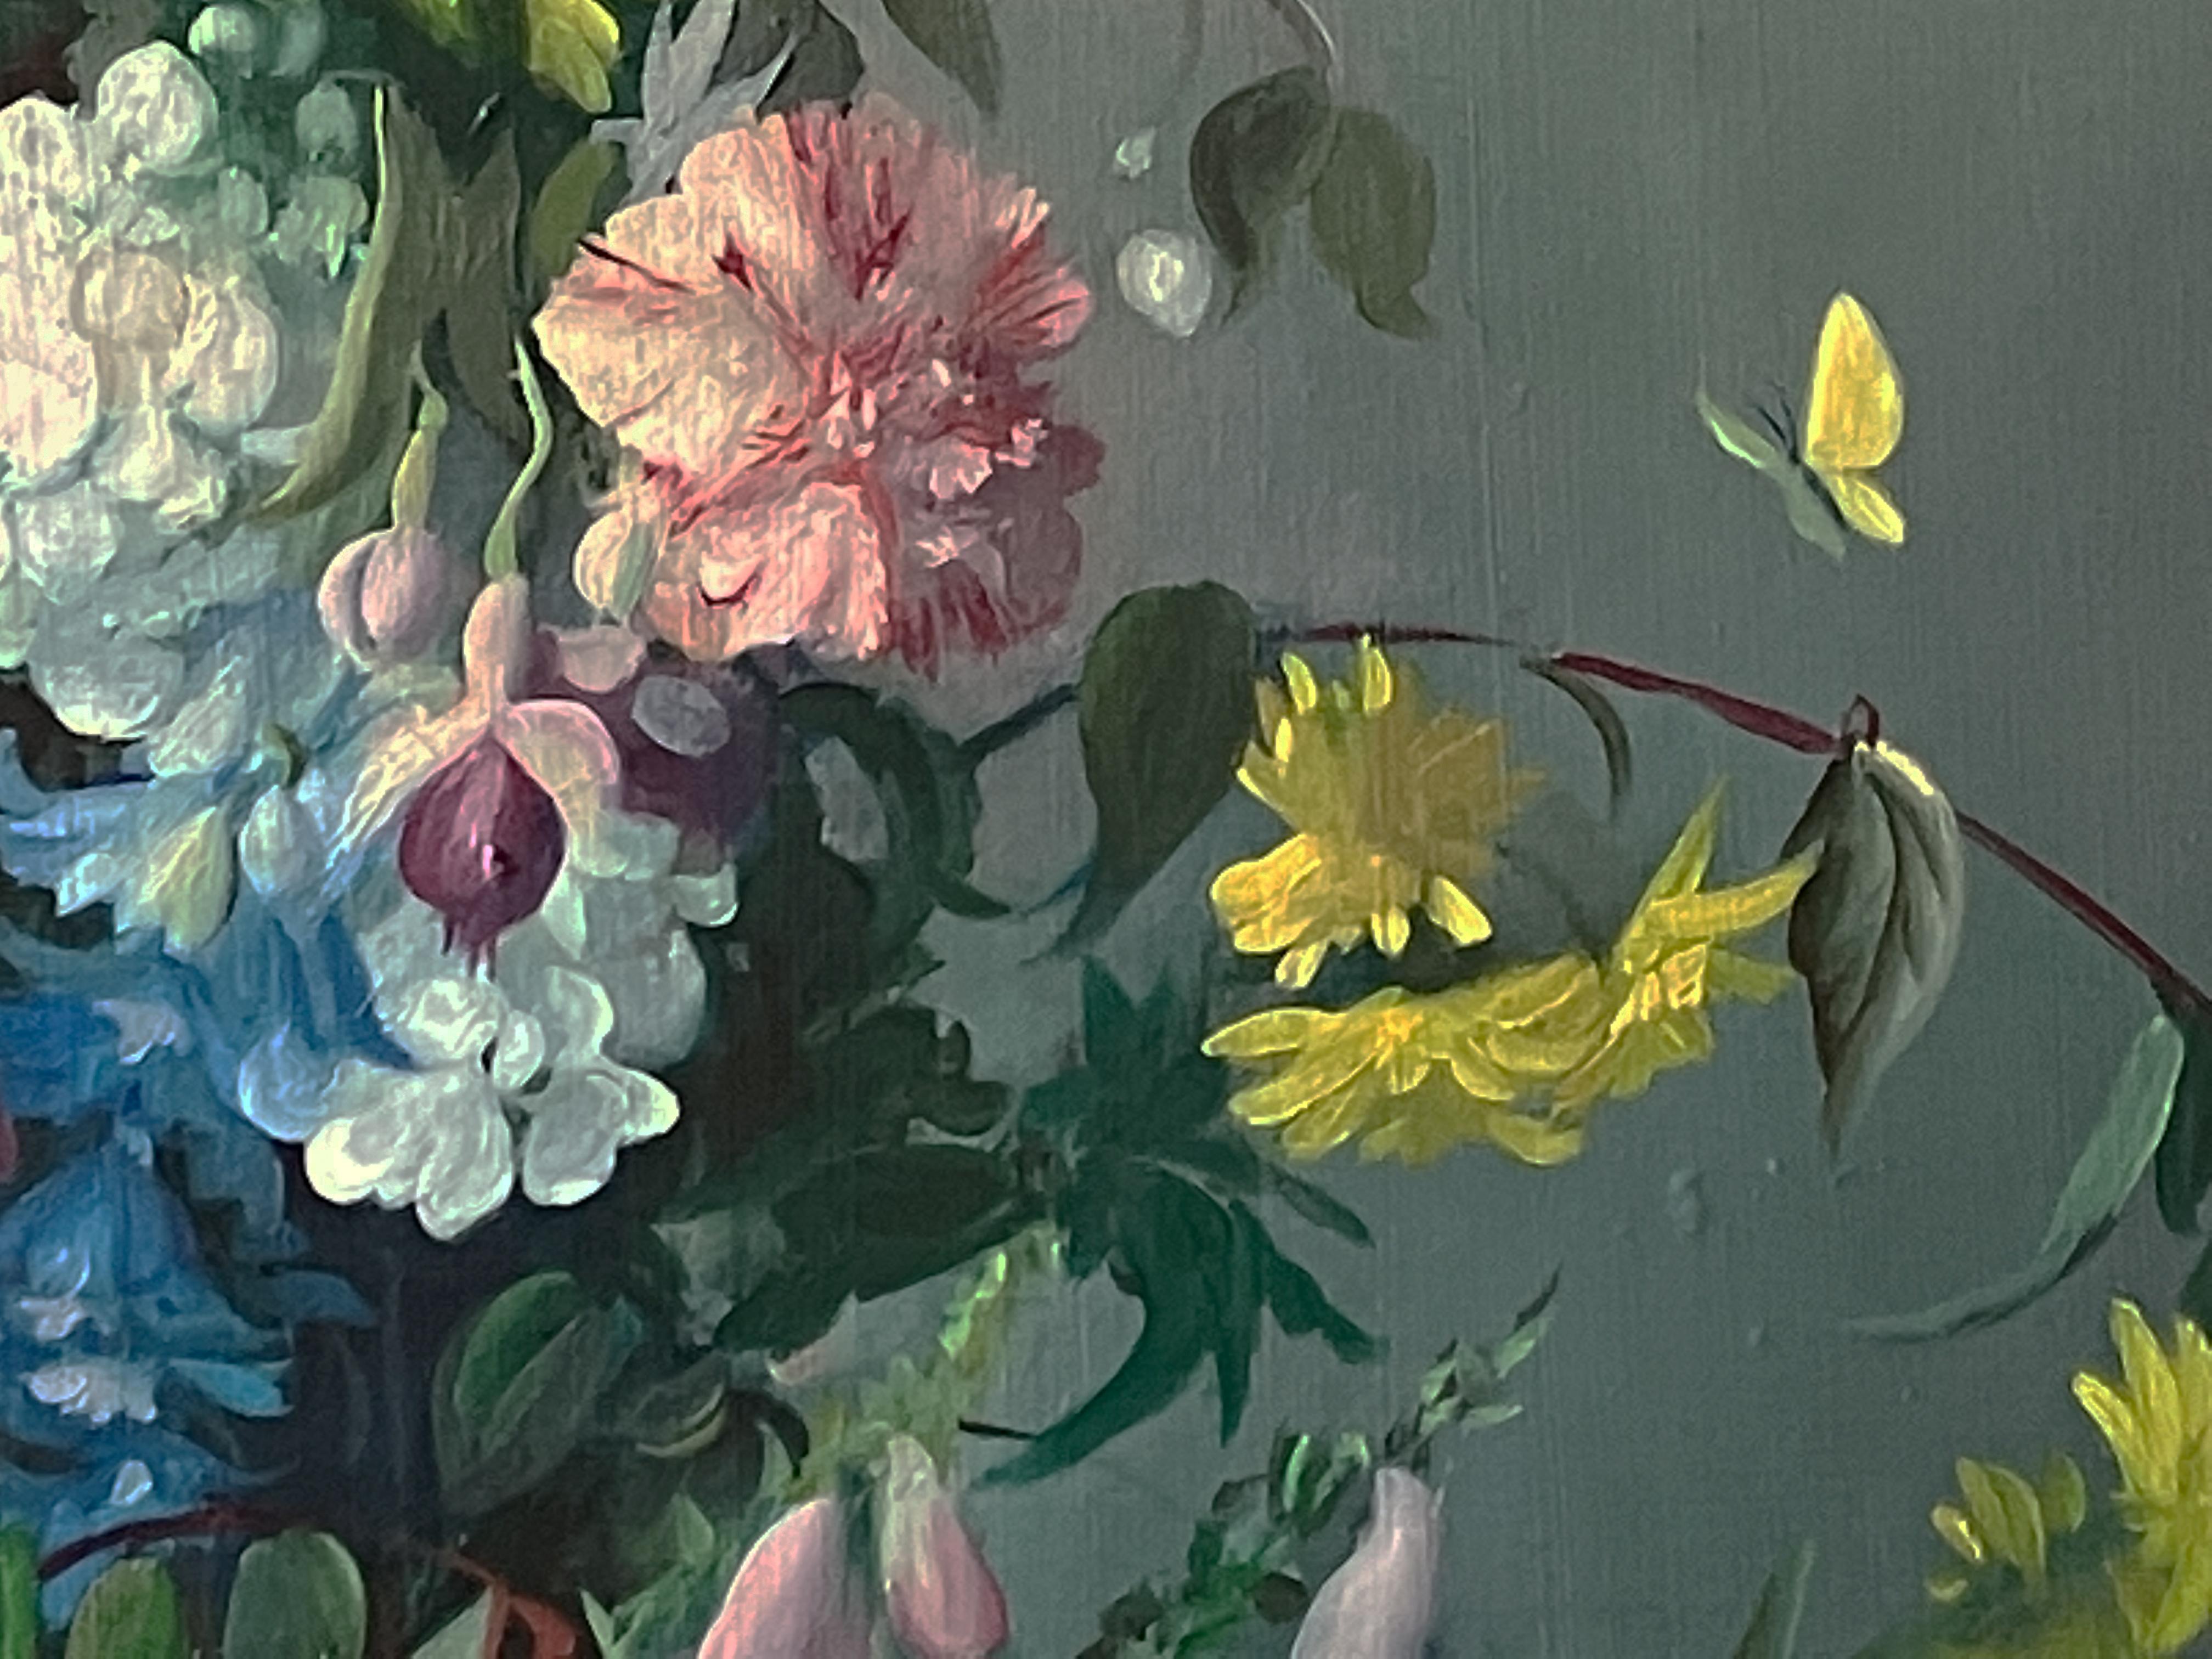 Still Life - Flowers in Urn with Bird's Nest - Realist Painting by Paul Longenecker